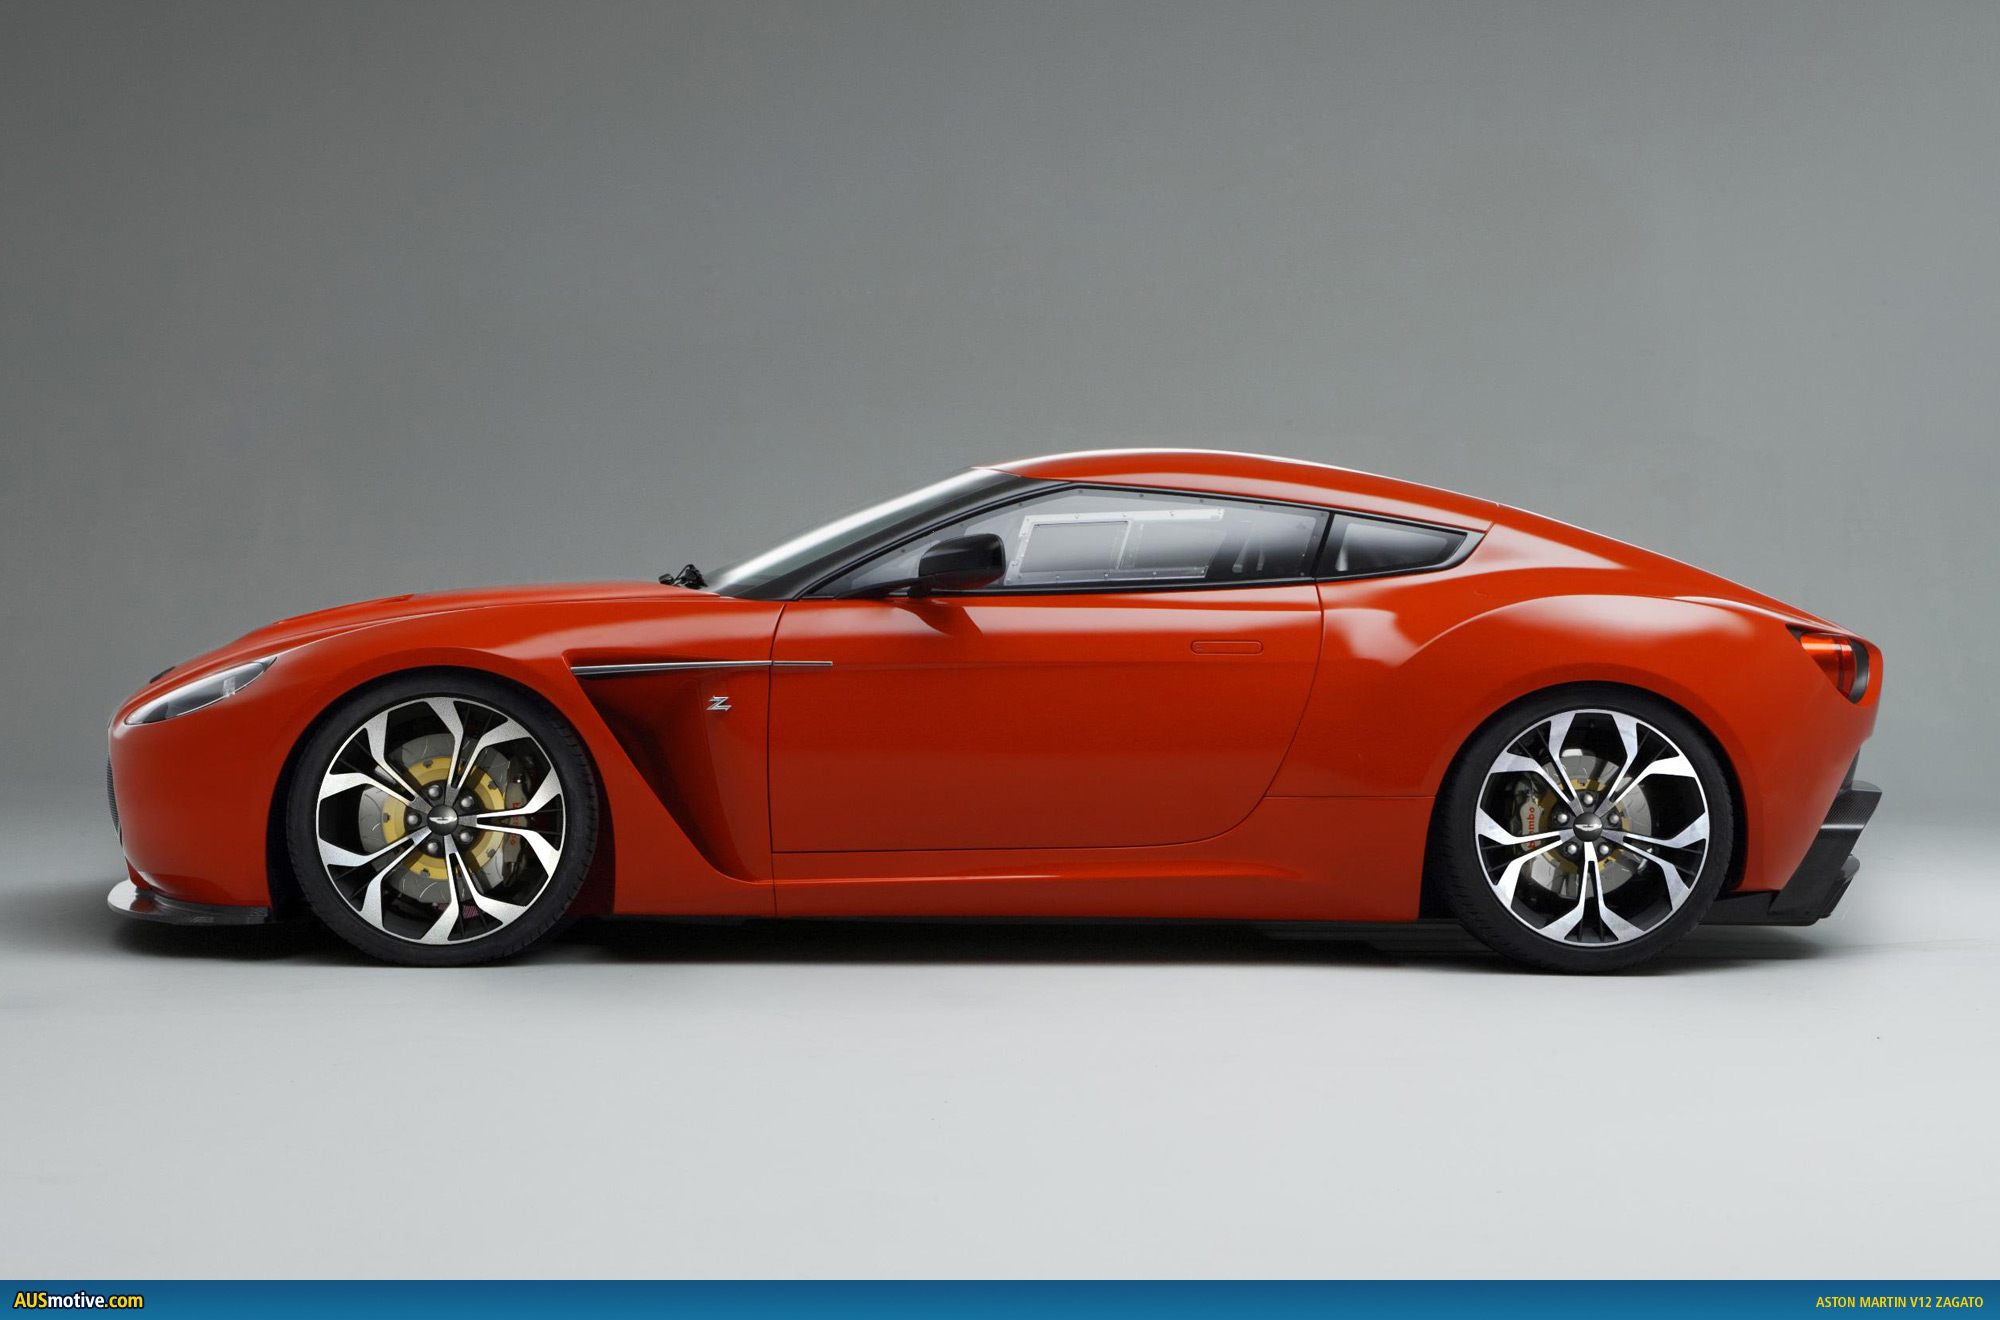 AUSmotive.com » Stunning Aston Martin V12 Zagato revealed ahead of race ...